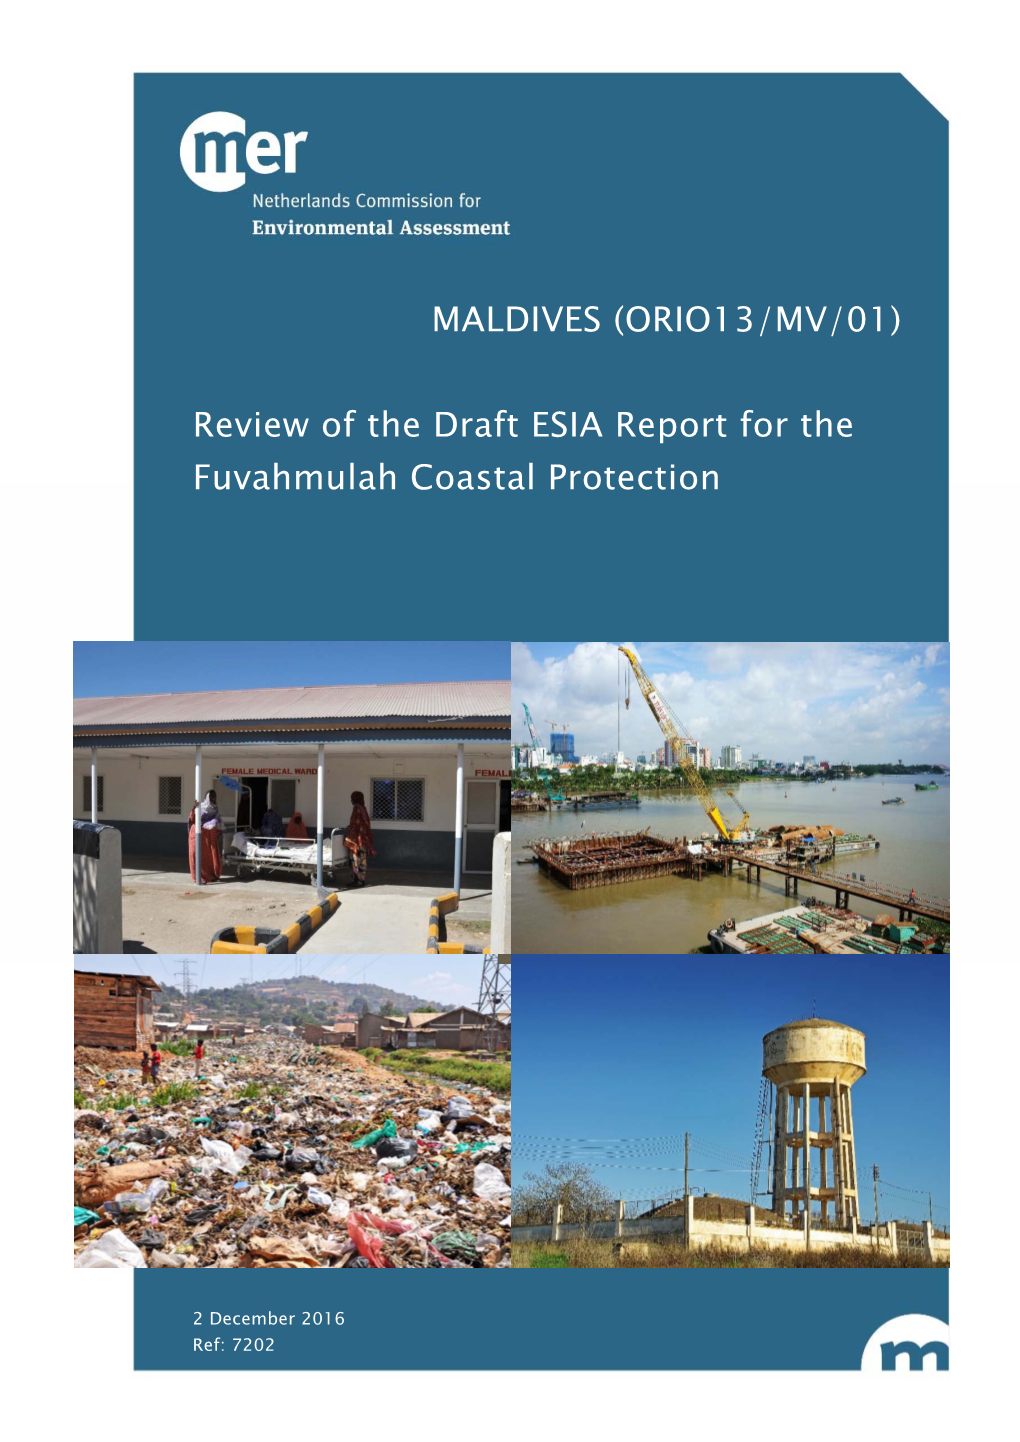 Review Draft ESIA for Fuvahmulah Coastal Protection Maldives